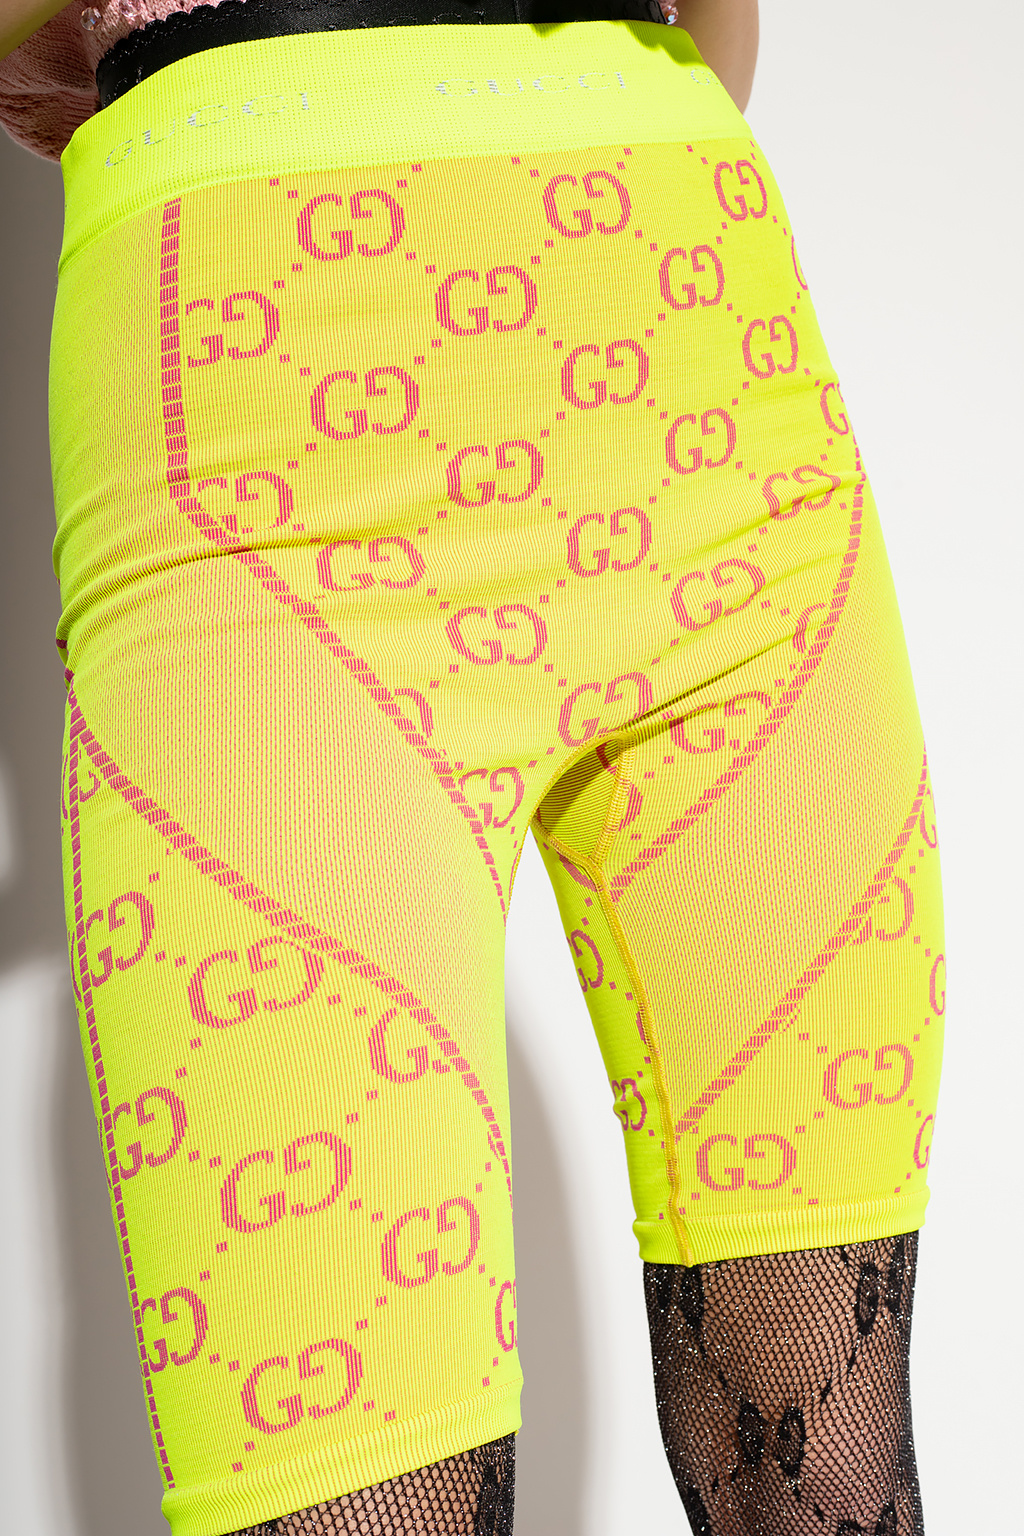 Gucci - Gucci gg interlocking g tights stockings -BNWT on Designer